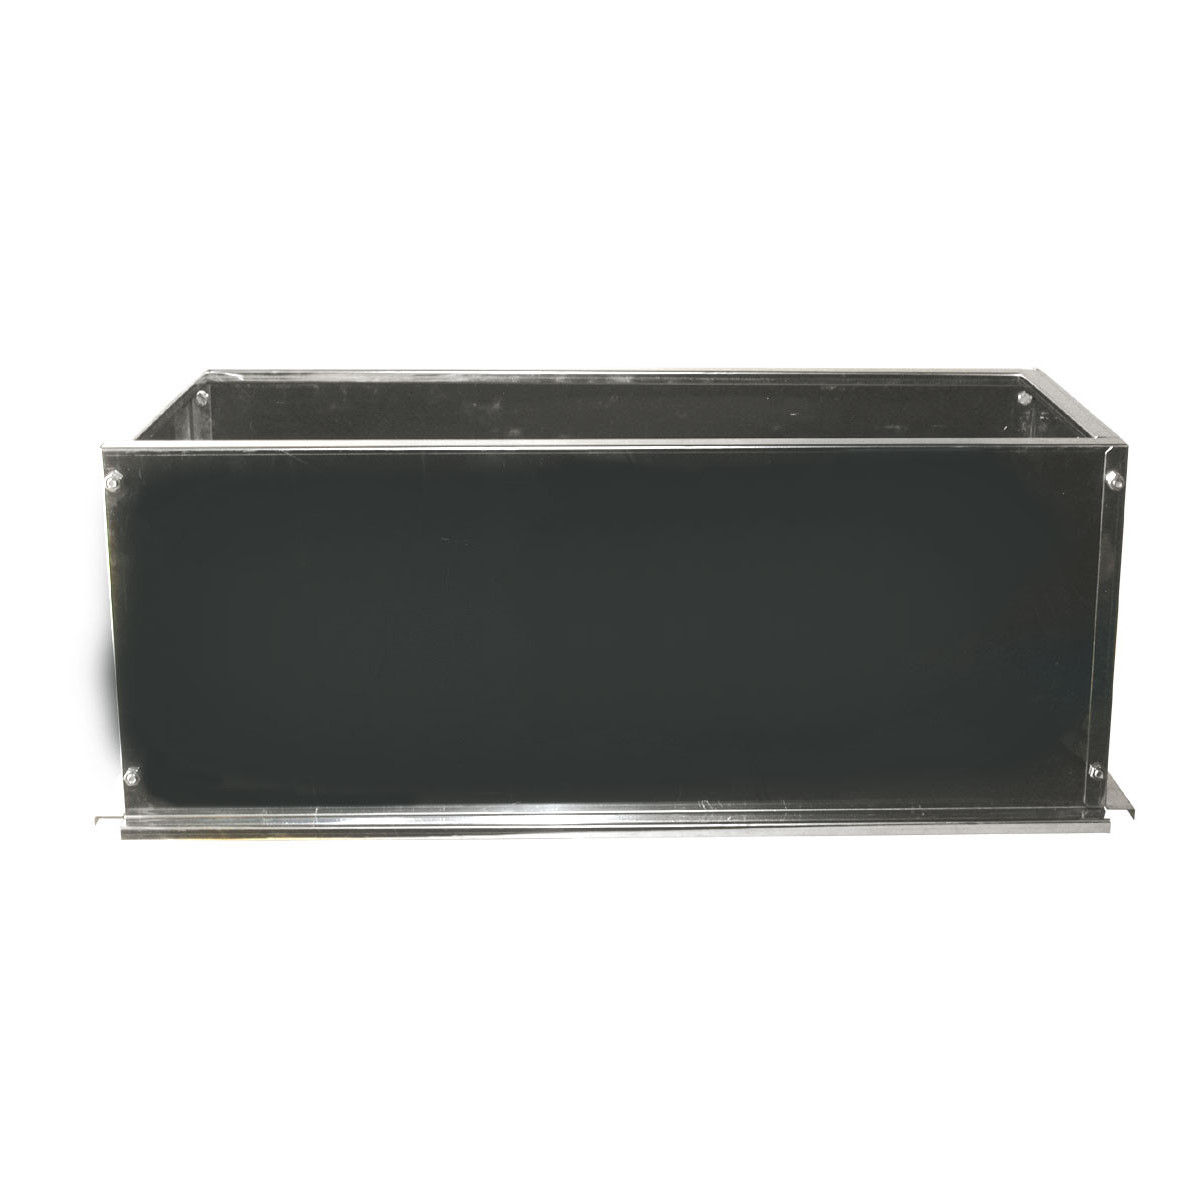 veiligheidsbox plastic 53 x 84 cm